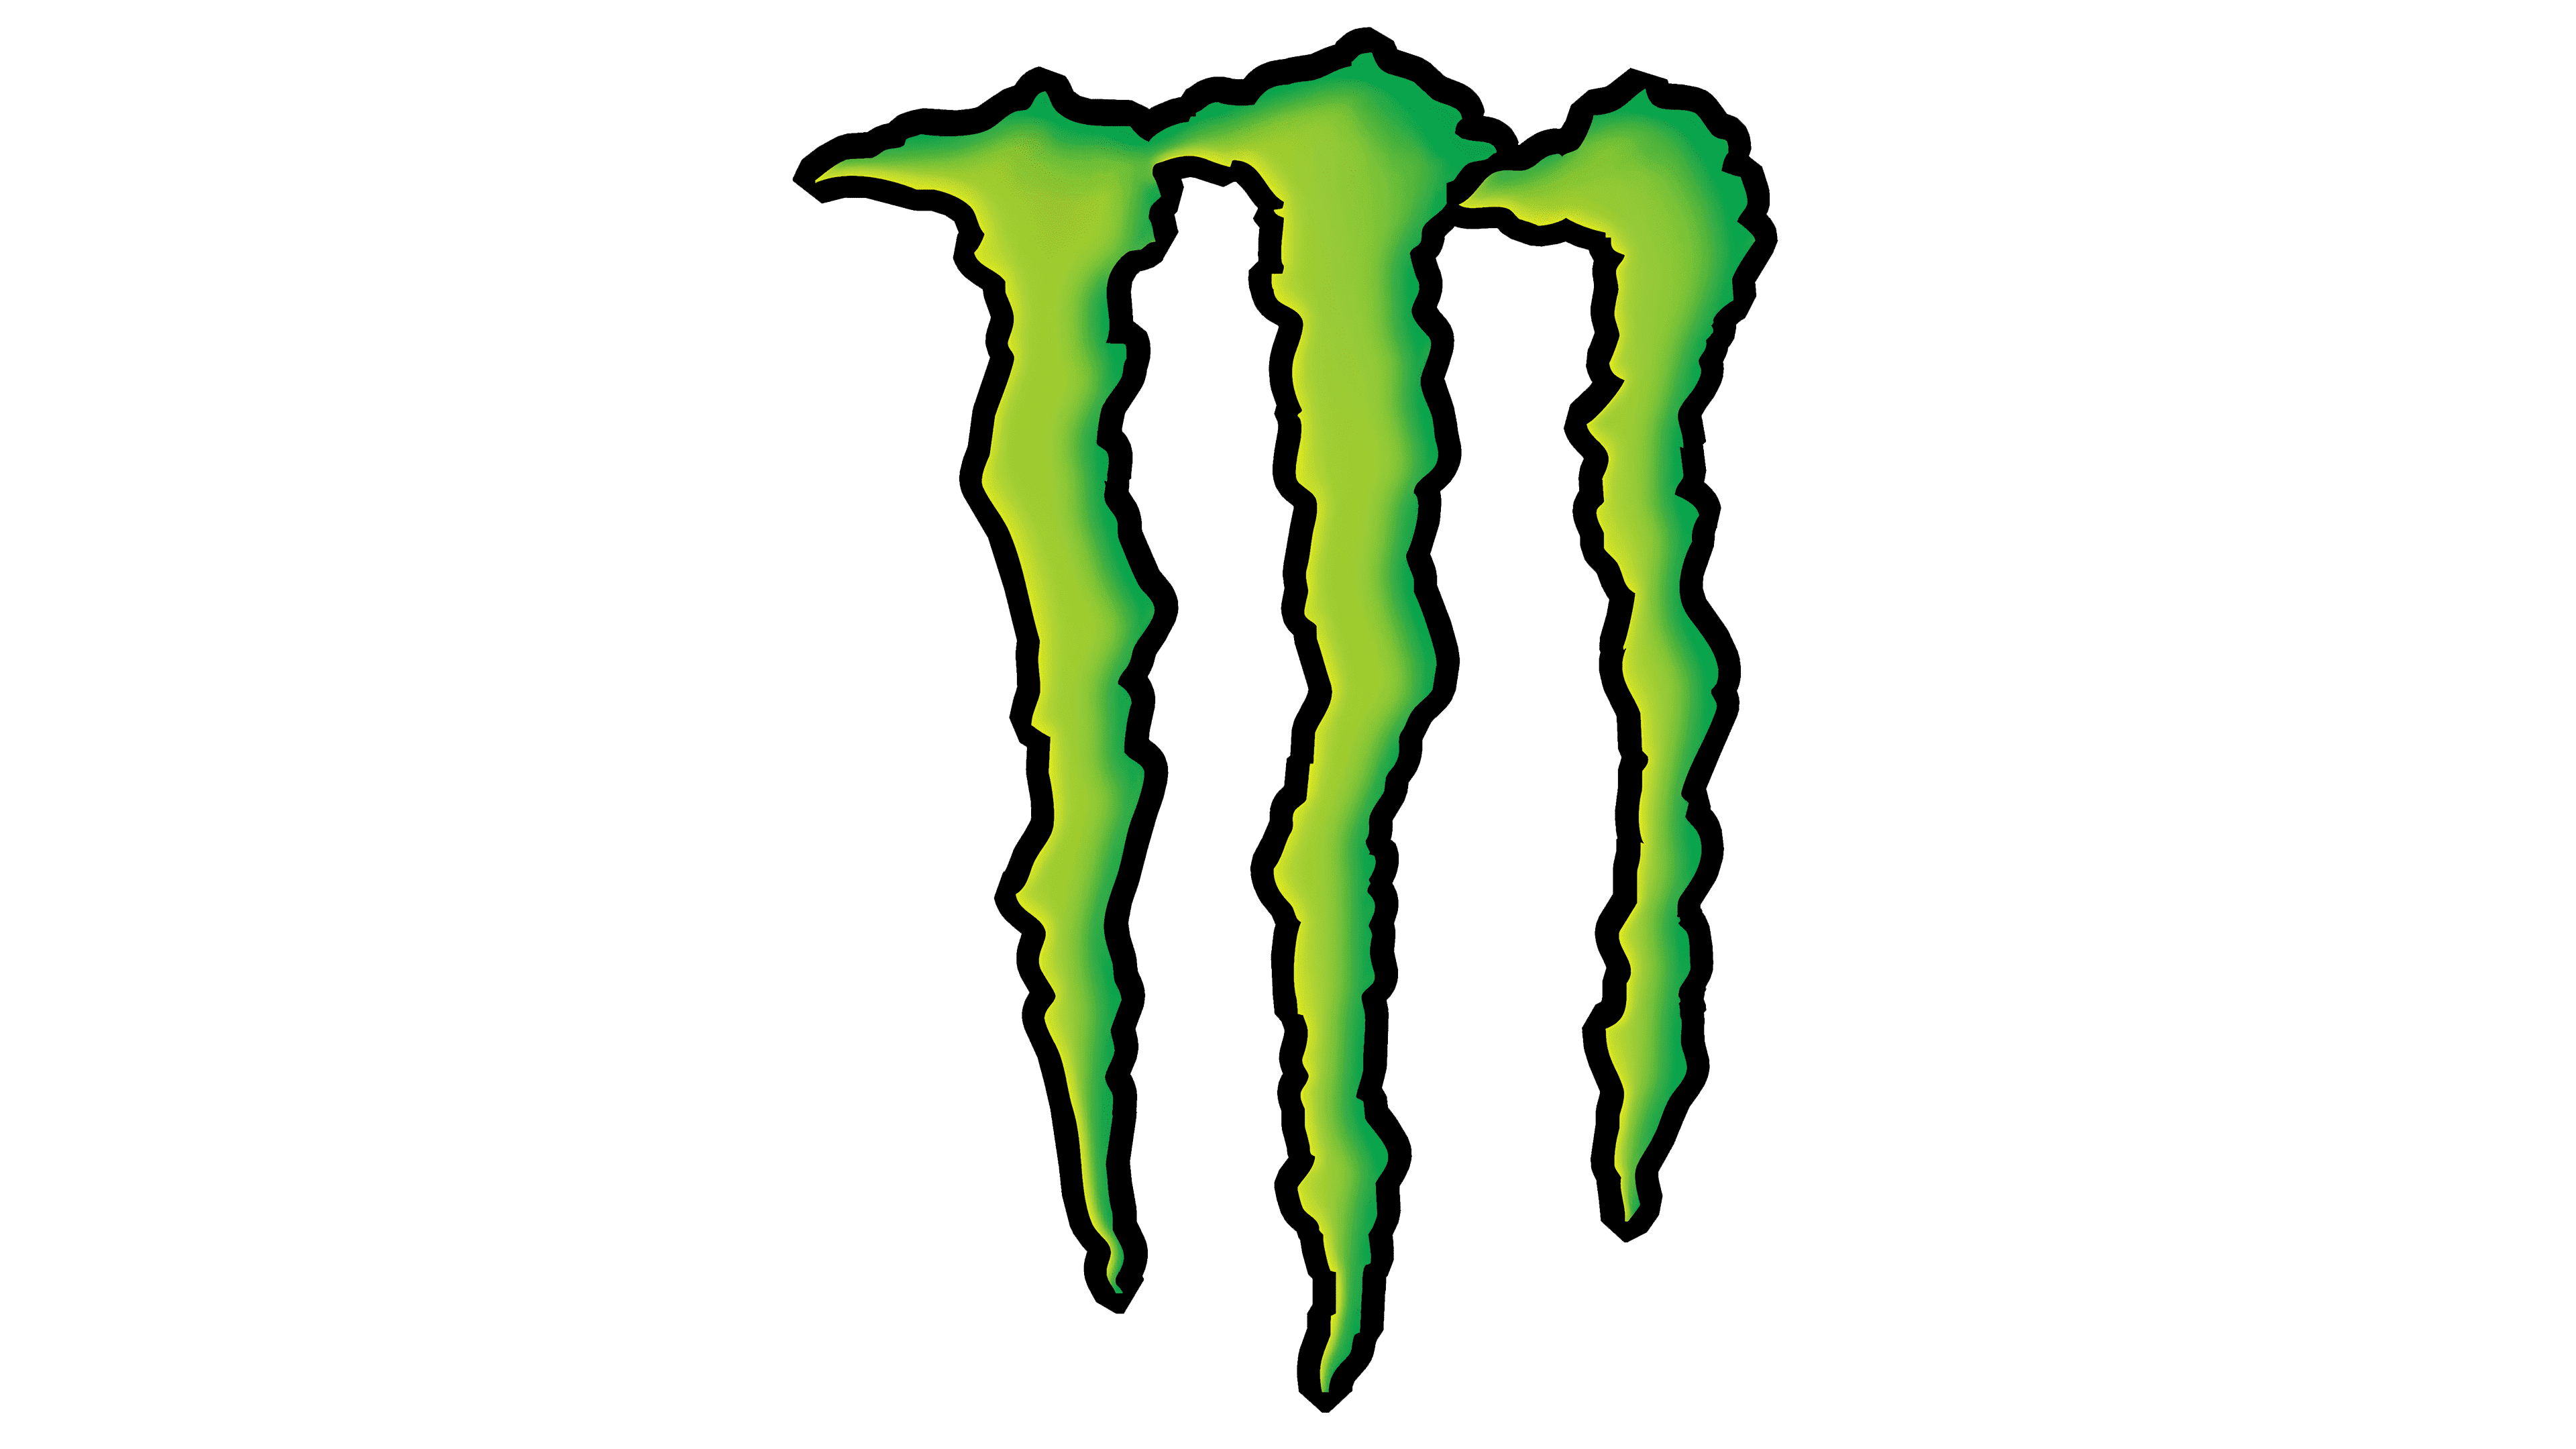 monster energy drink symbol